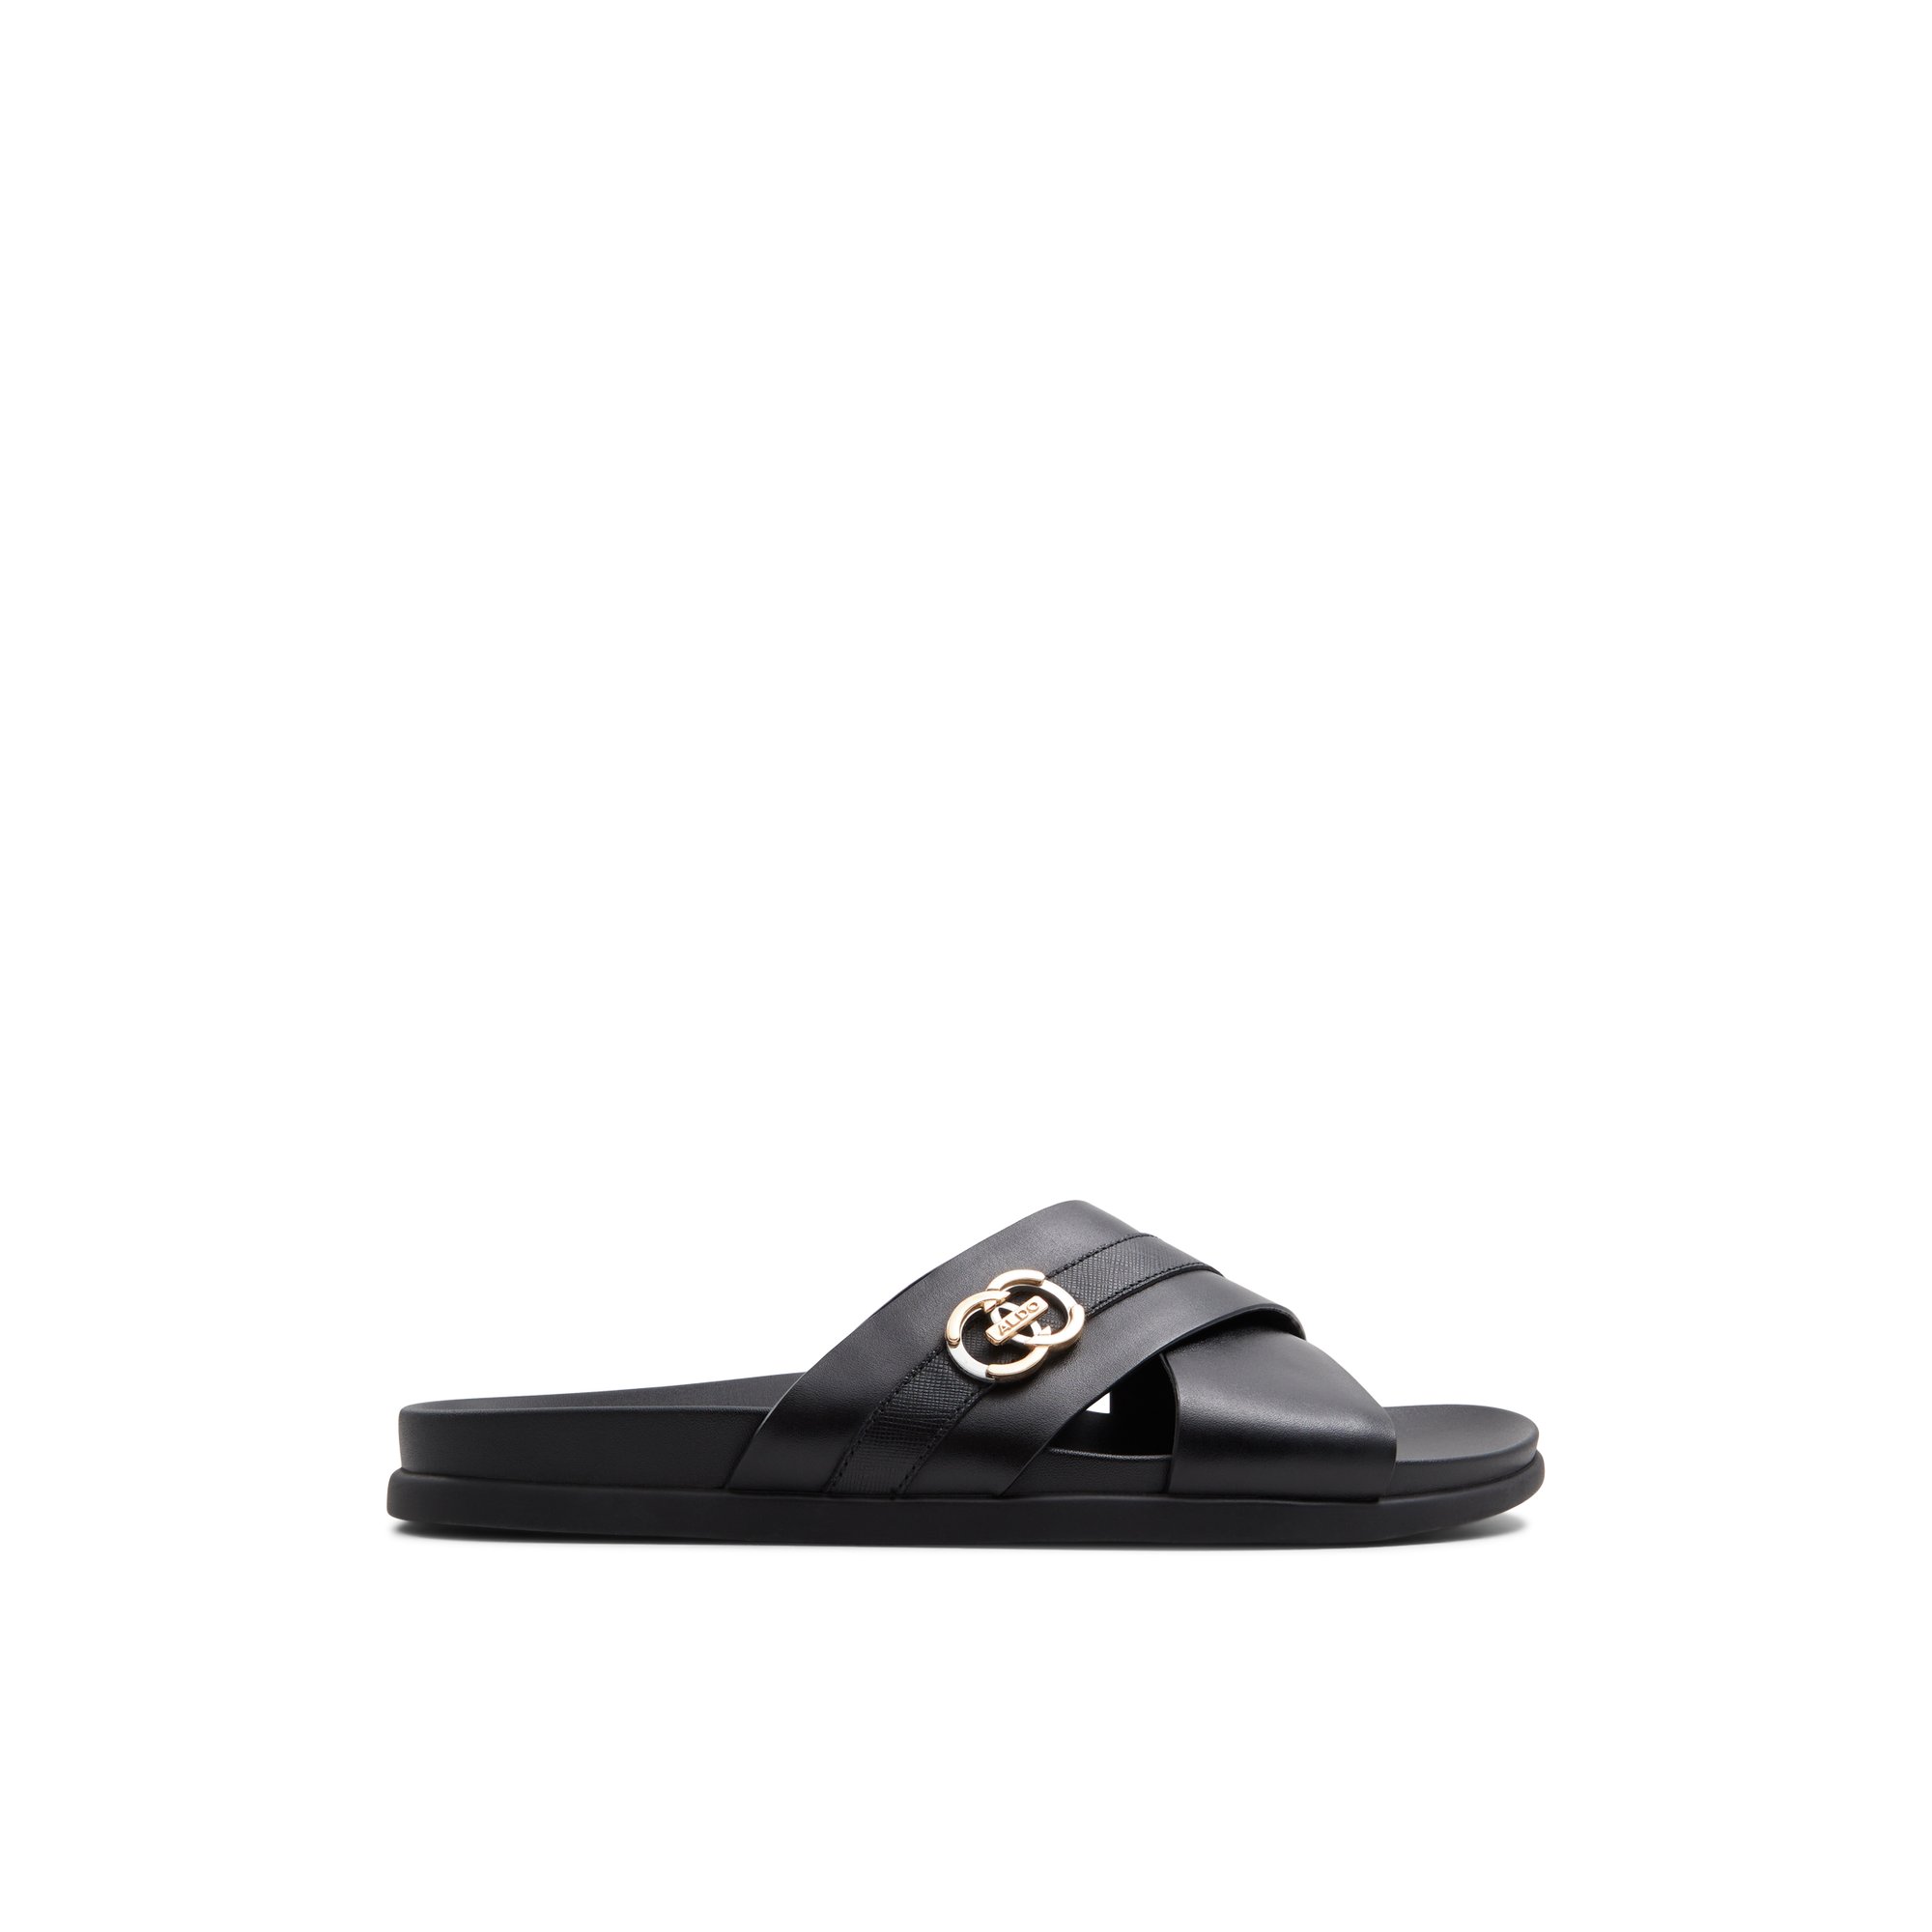 ALDO Delmar - Men's Sandals - Black